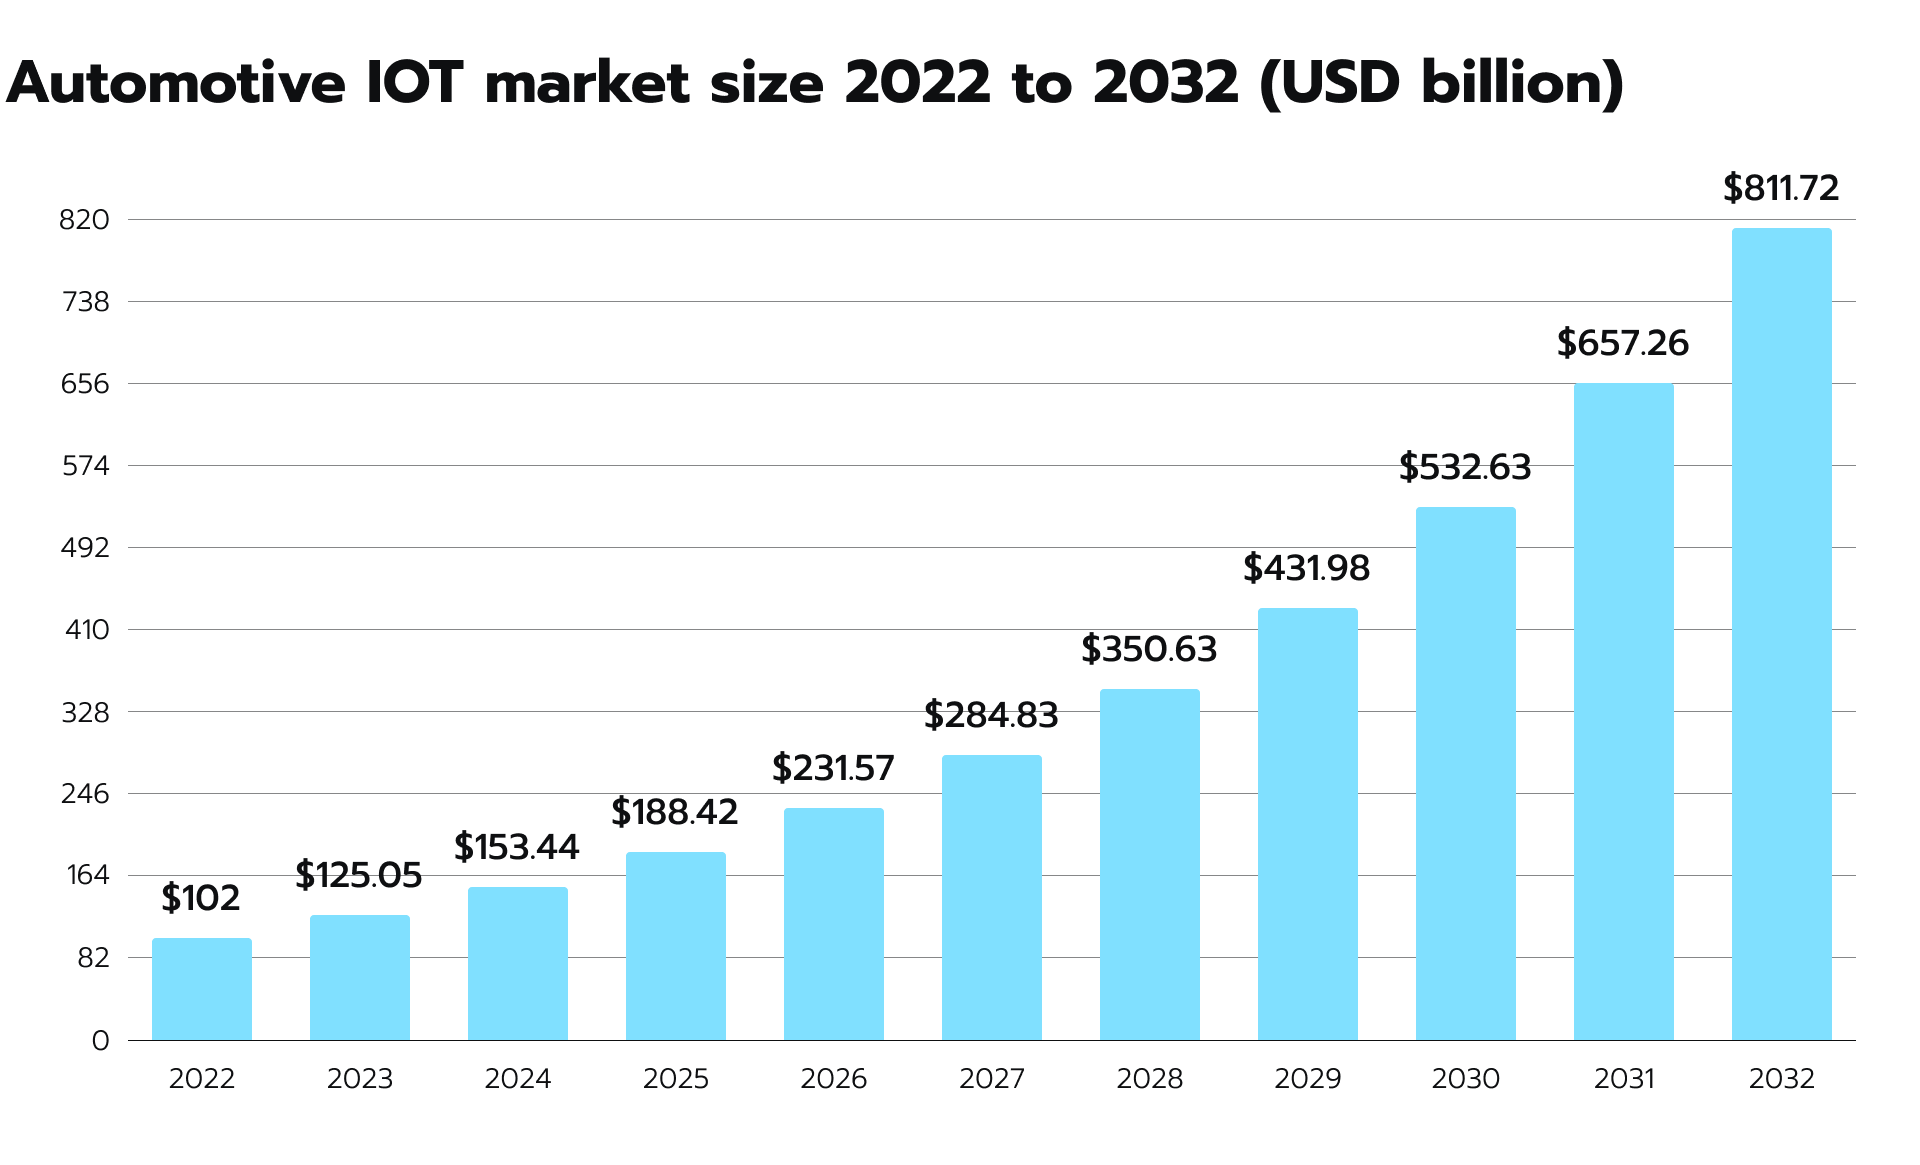 Automotive IoT market size 2022 to 2032